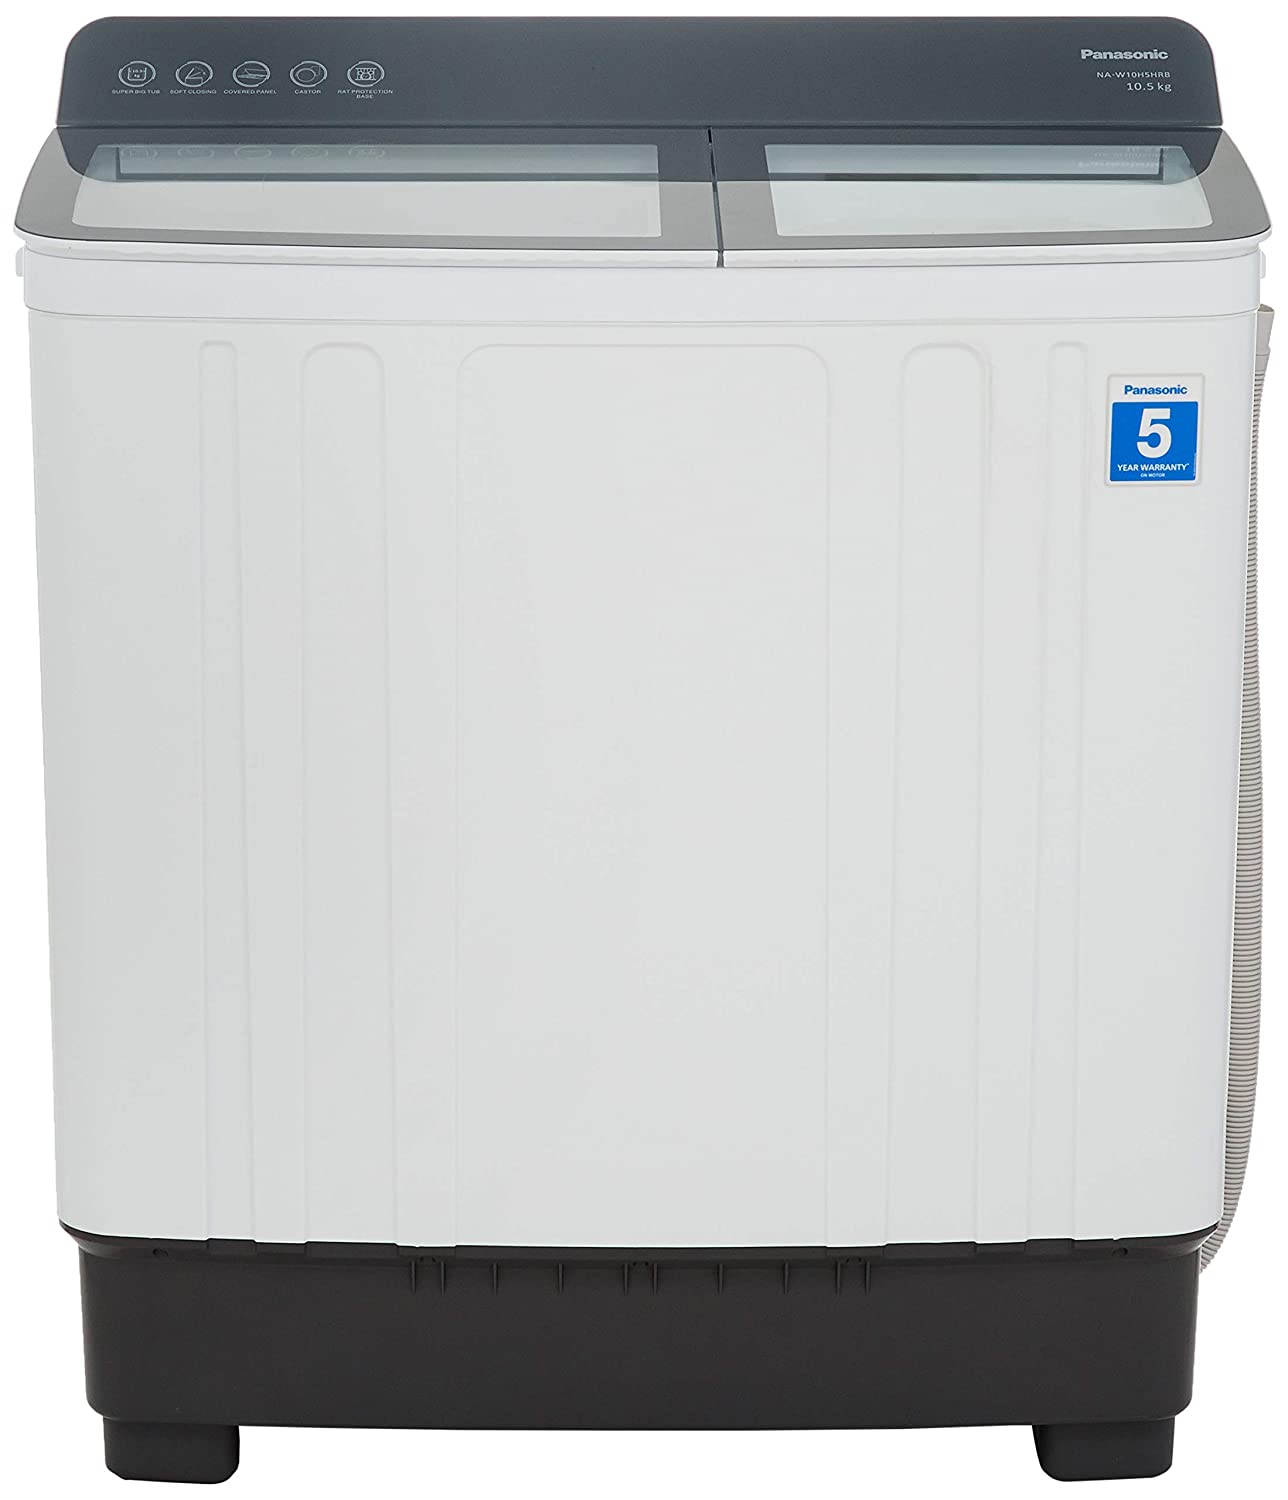 Panasonic 10 Kg Semi-automatic Top Loading Washing Machine Na-w10h5hrb Grey